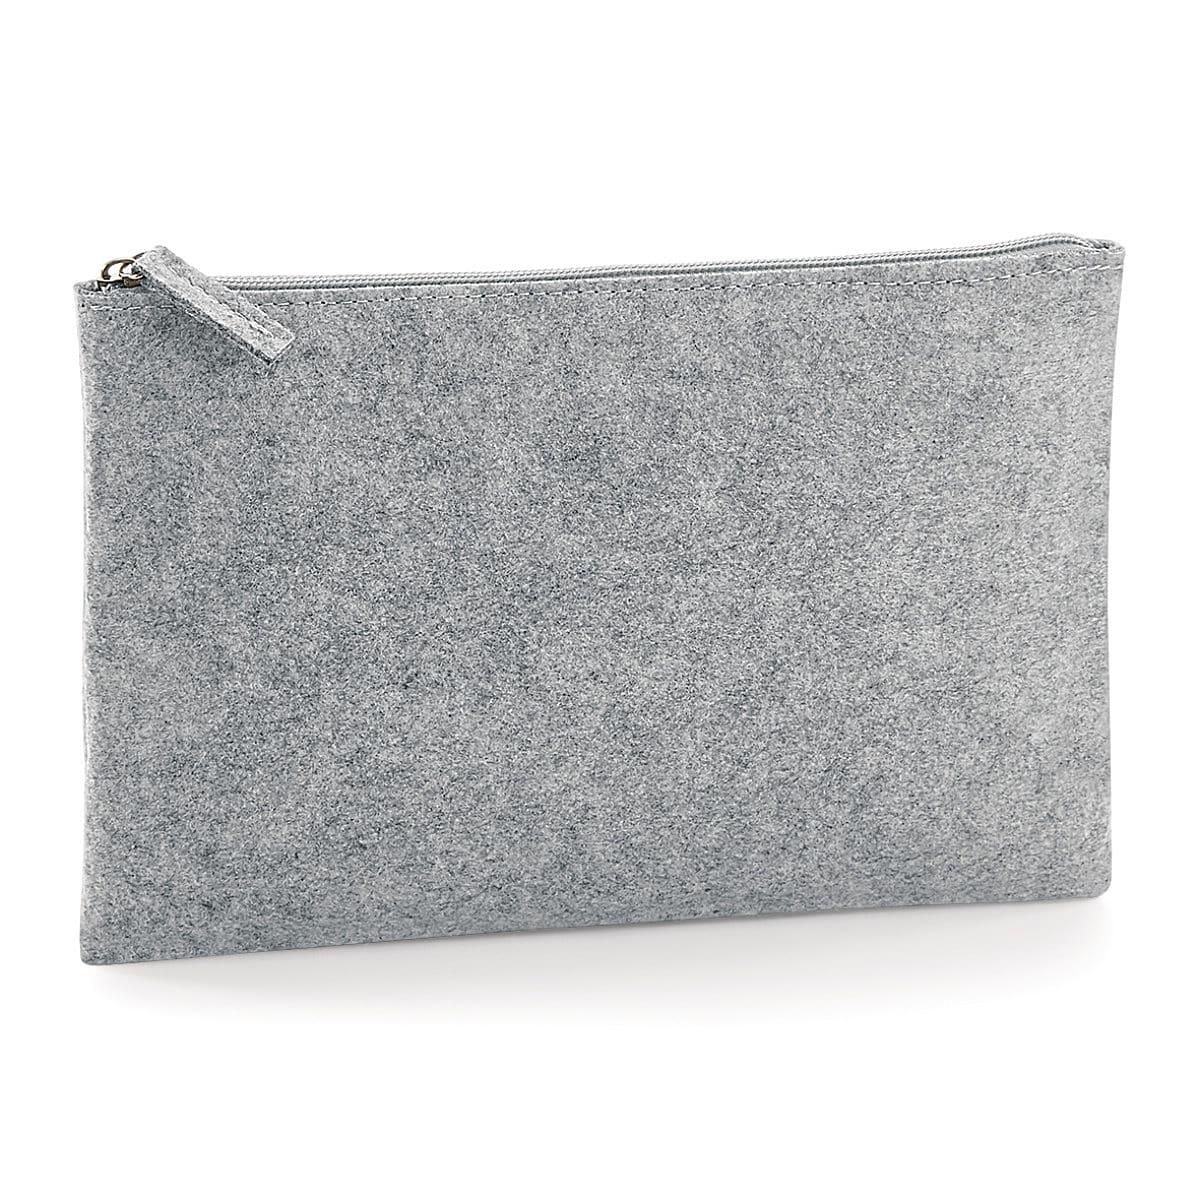 Bagbase Felt Accessory Pouch in Grey Melange (Product Code: BG725)